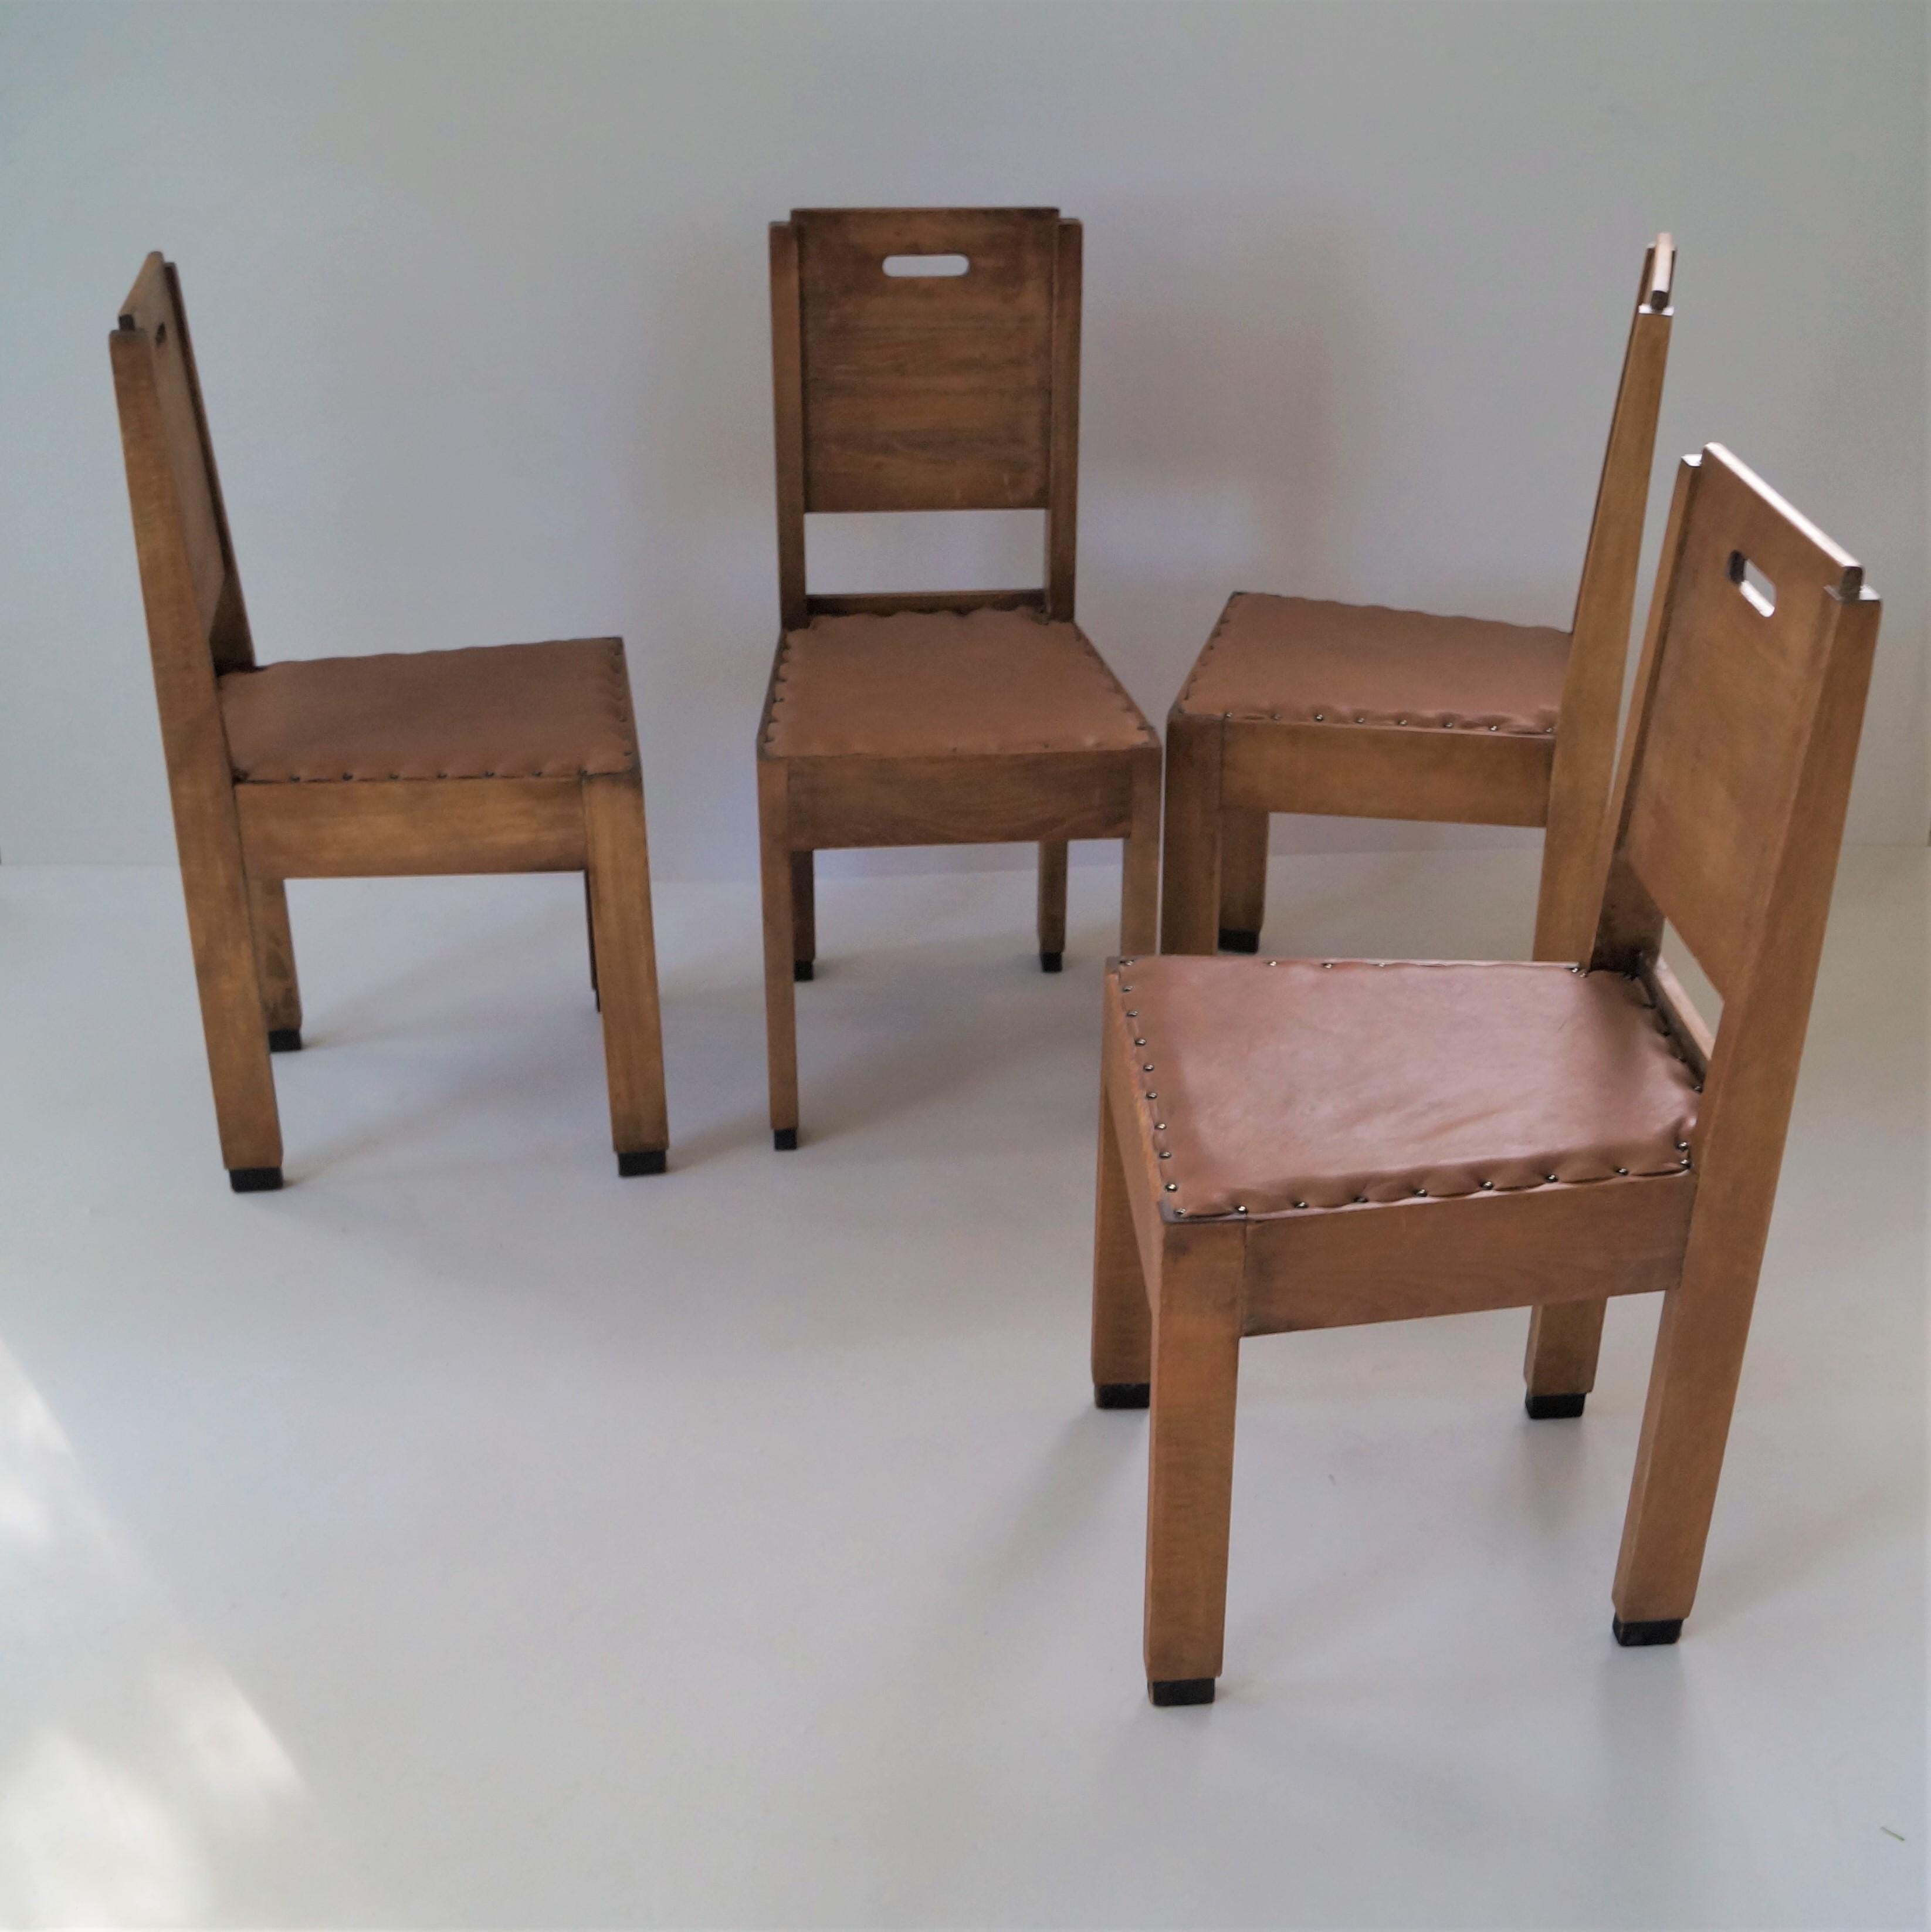 Dutch Art Deco De Stijl/Haagse School set of chairs, 1920s For Sale 3